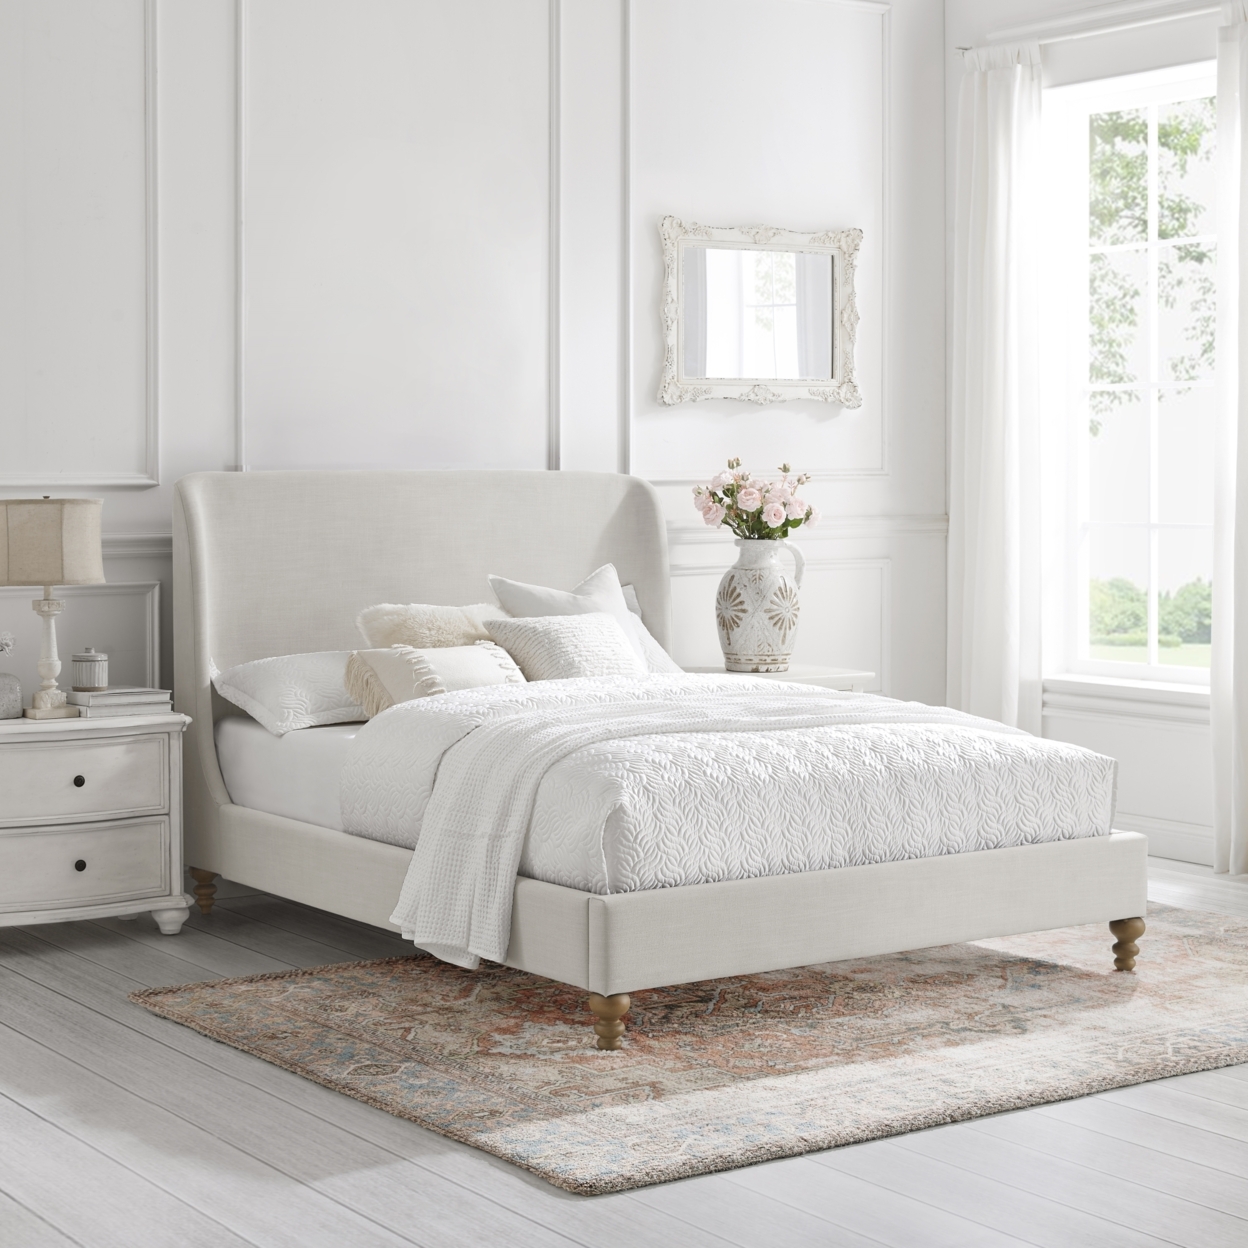 Rosalyn Bed-Wingback-Upholstered-Slats Included - Cream White, King